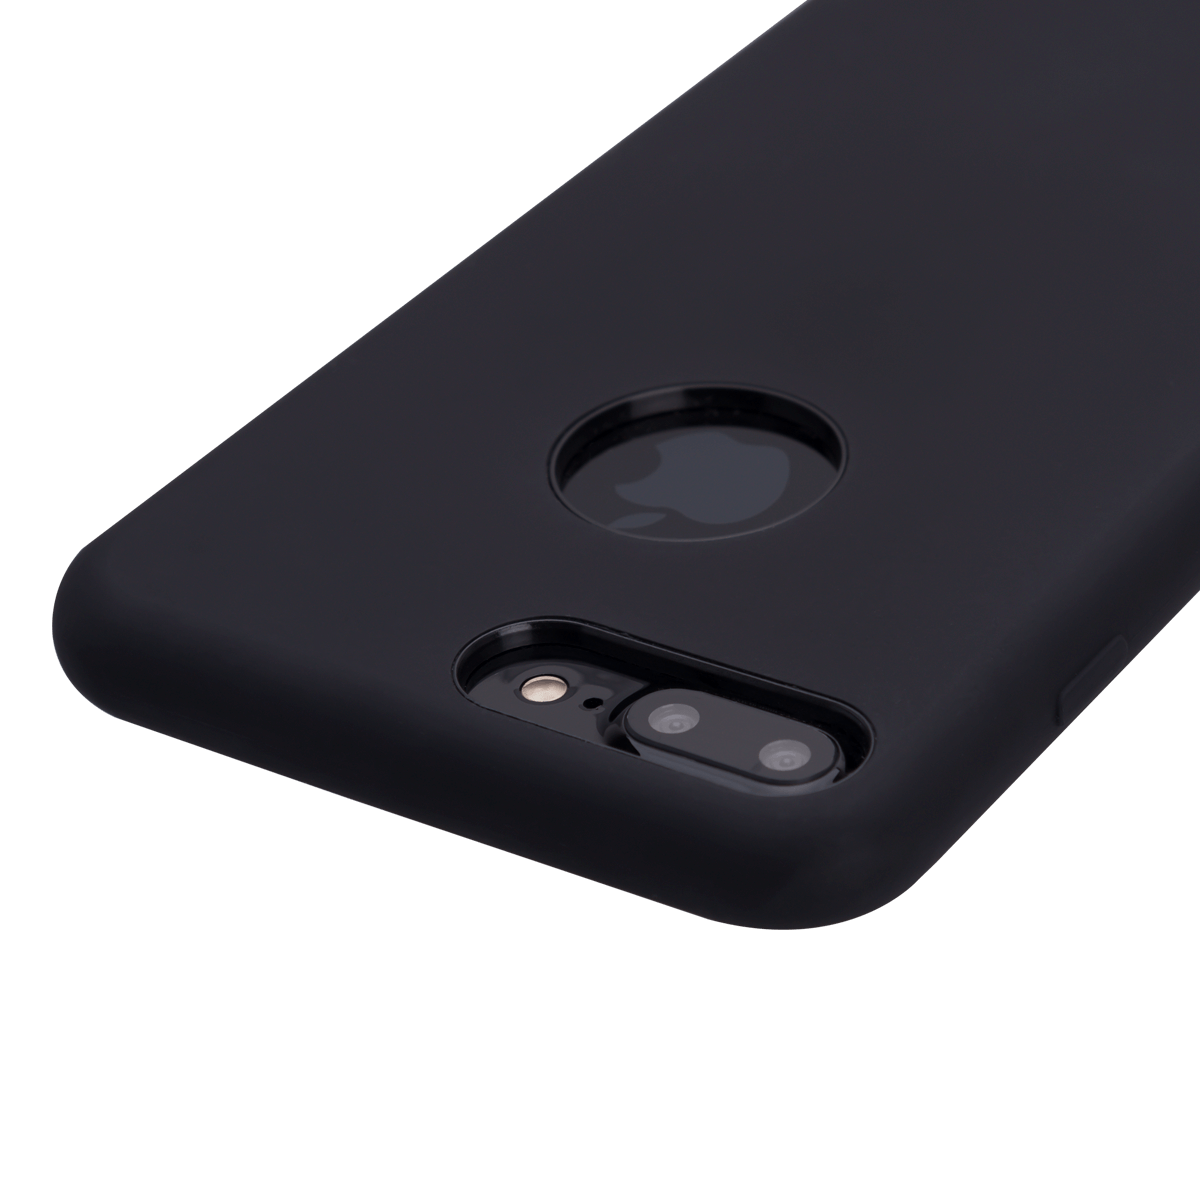 iPhone 7/8 Plus için spada Liquid Silikon Siyah renkli kapak